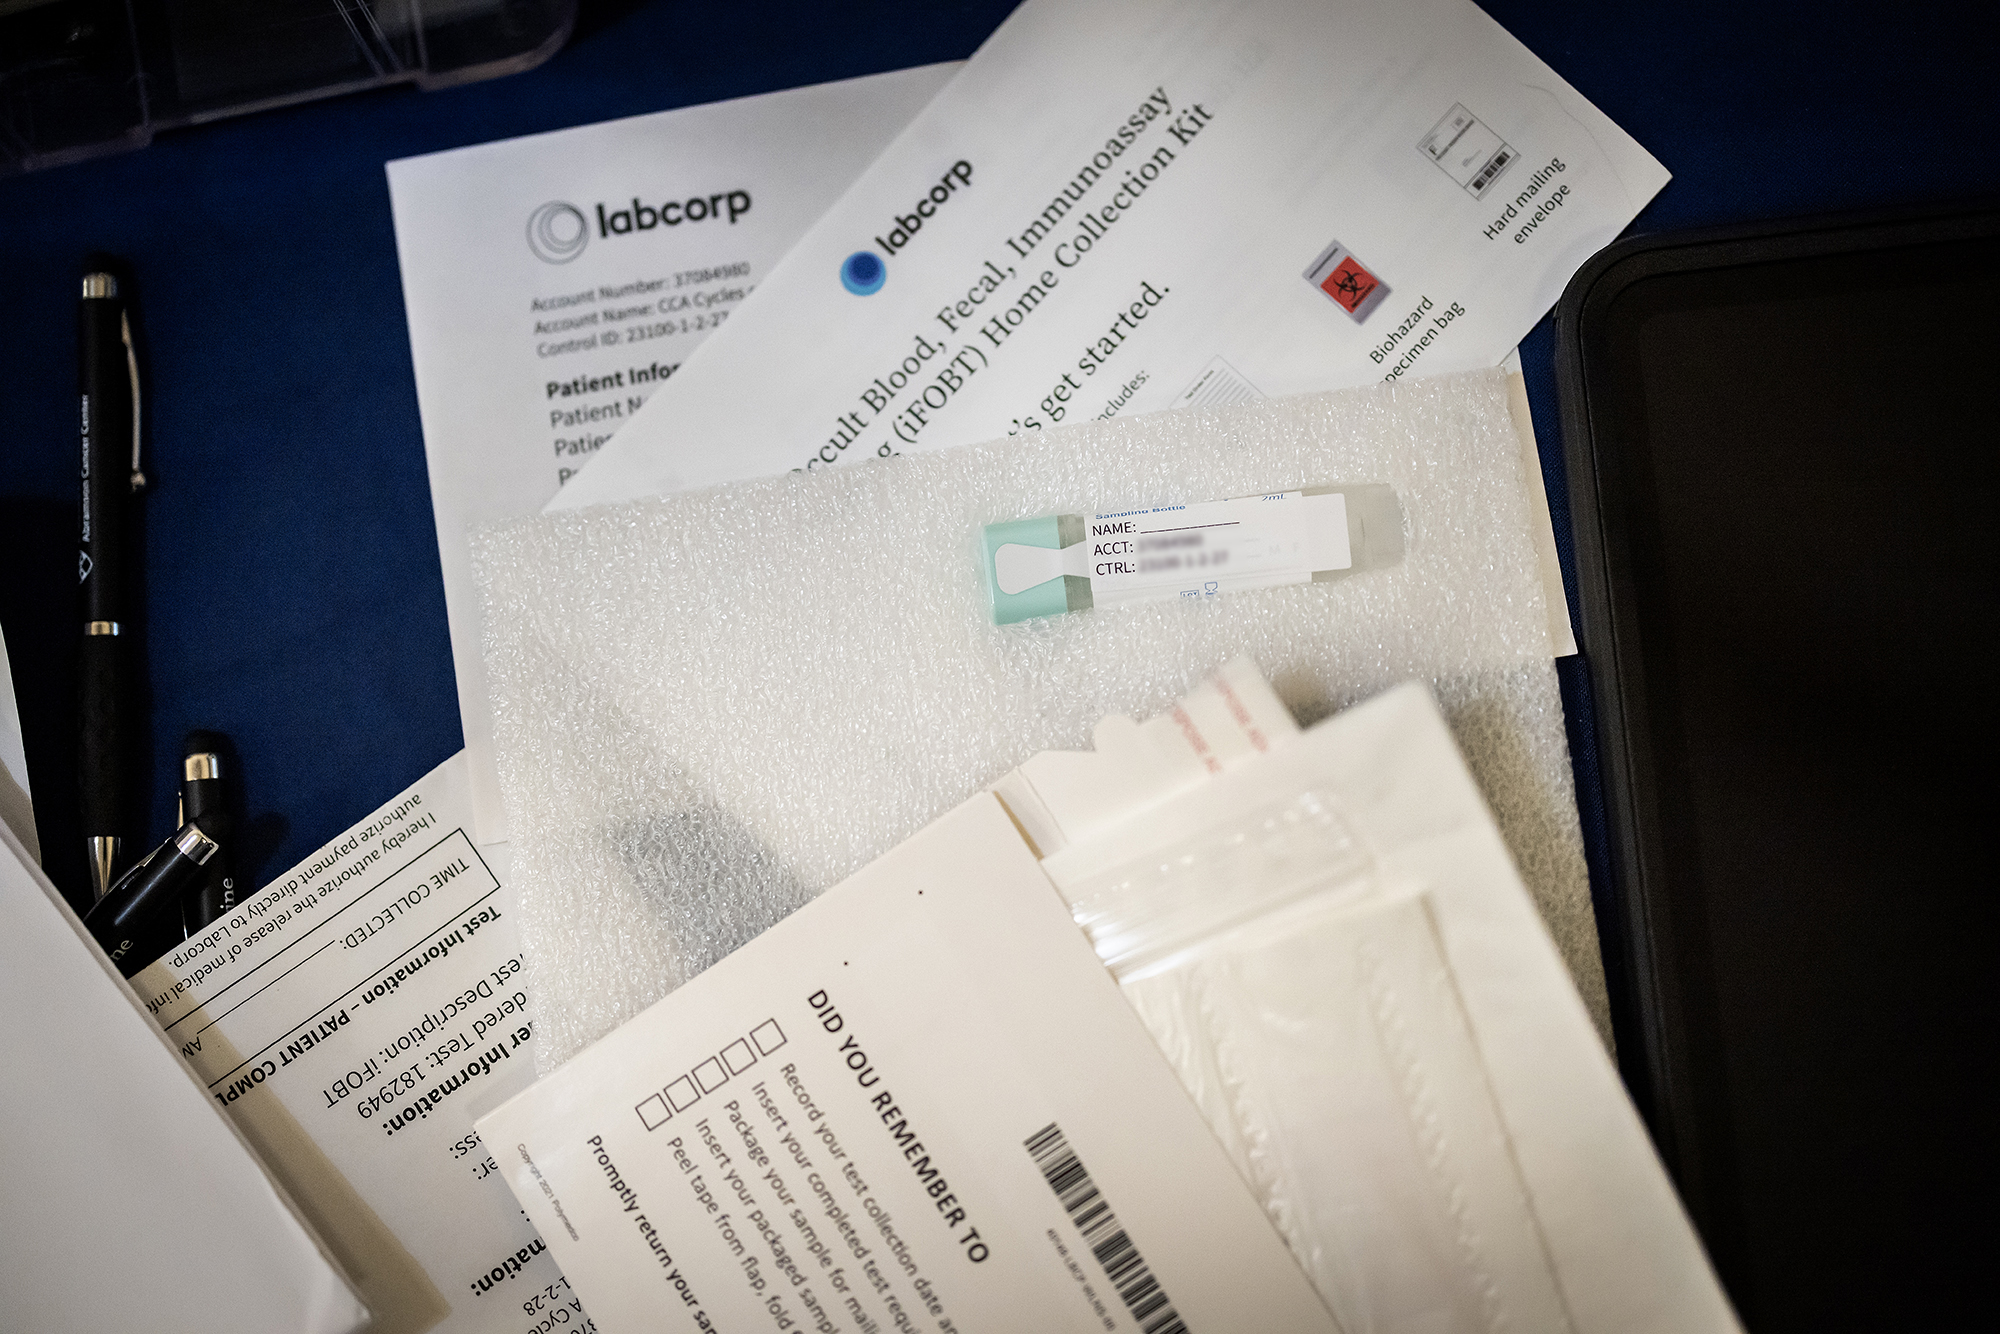 colorectal screening kits